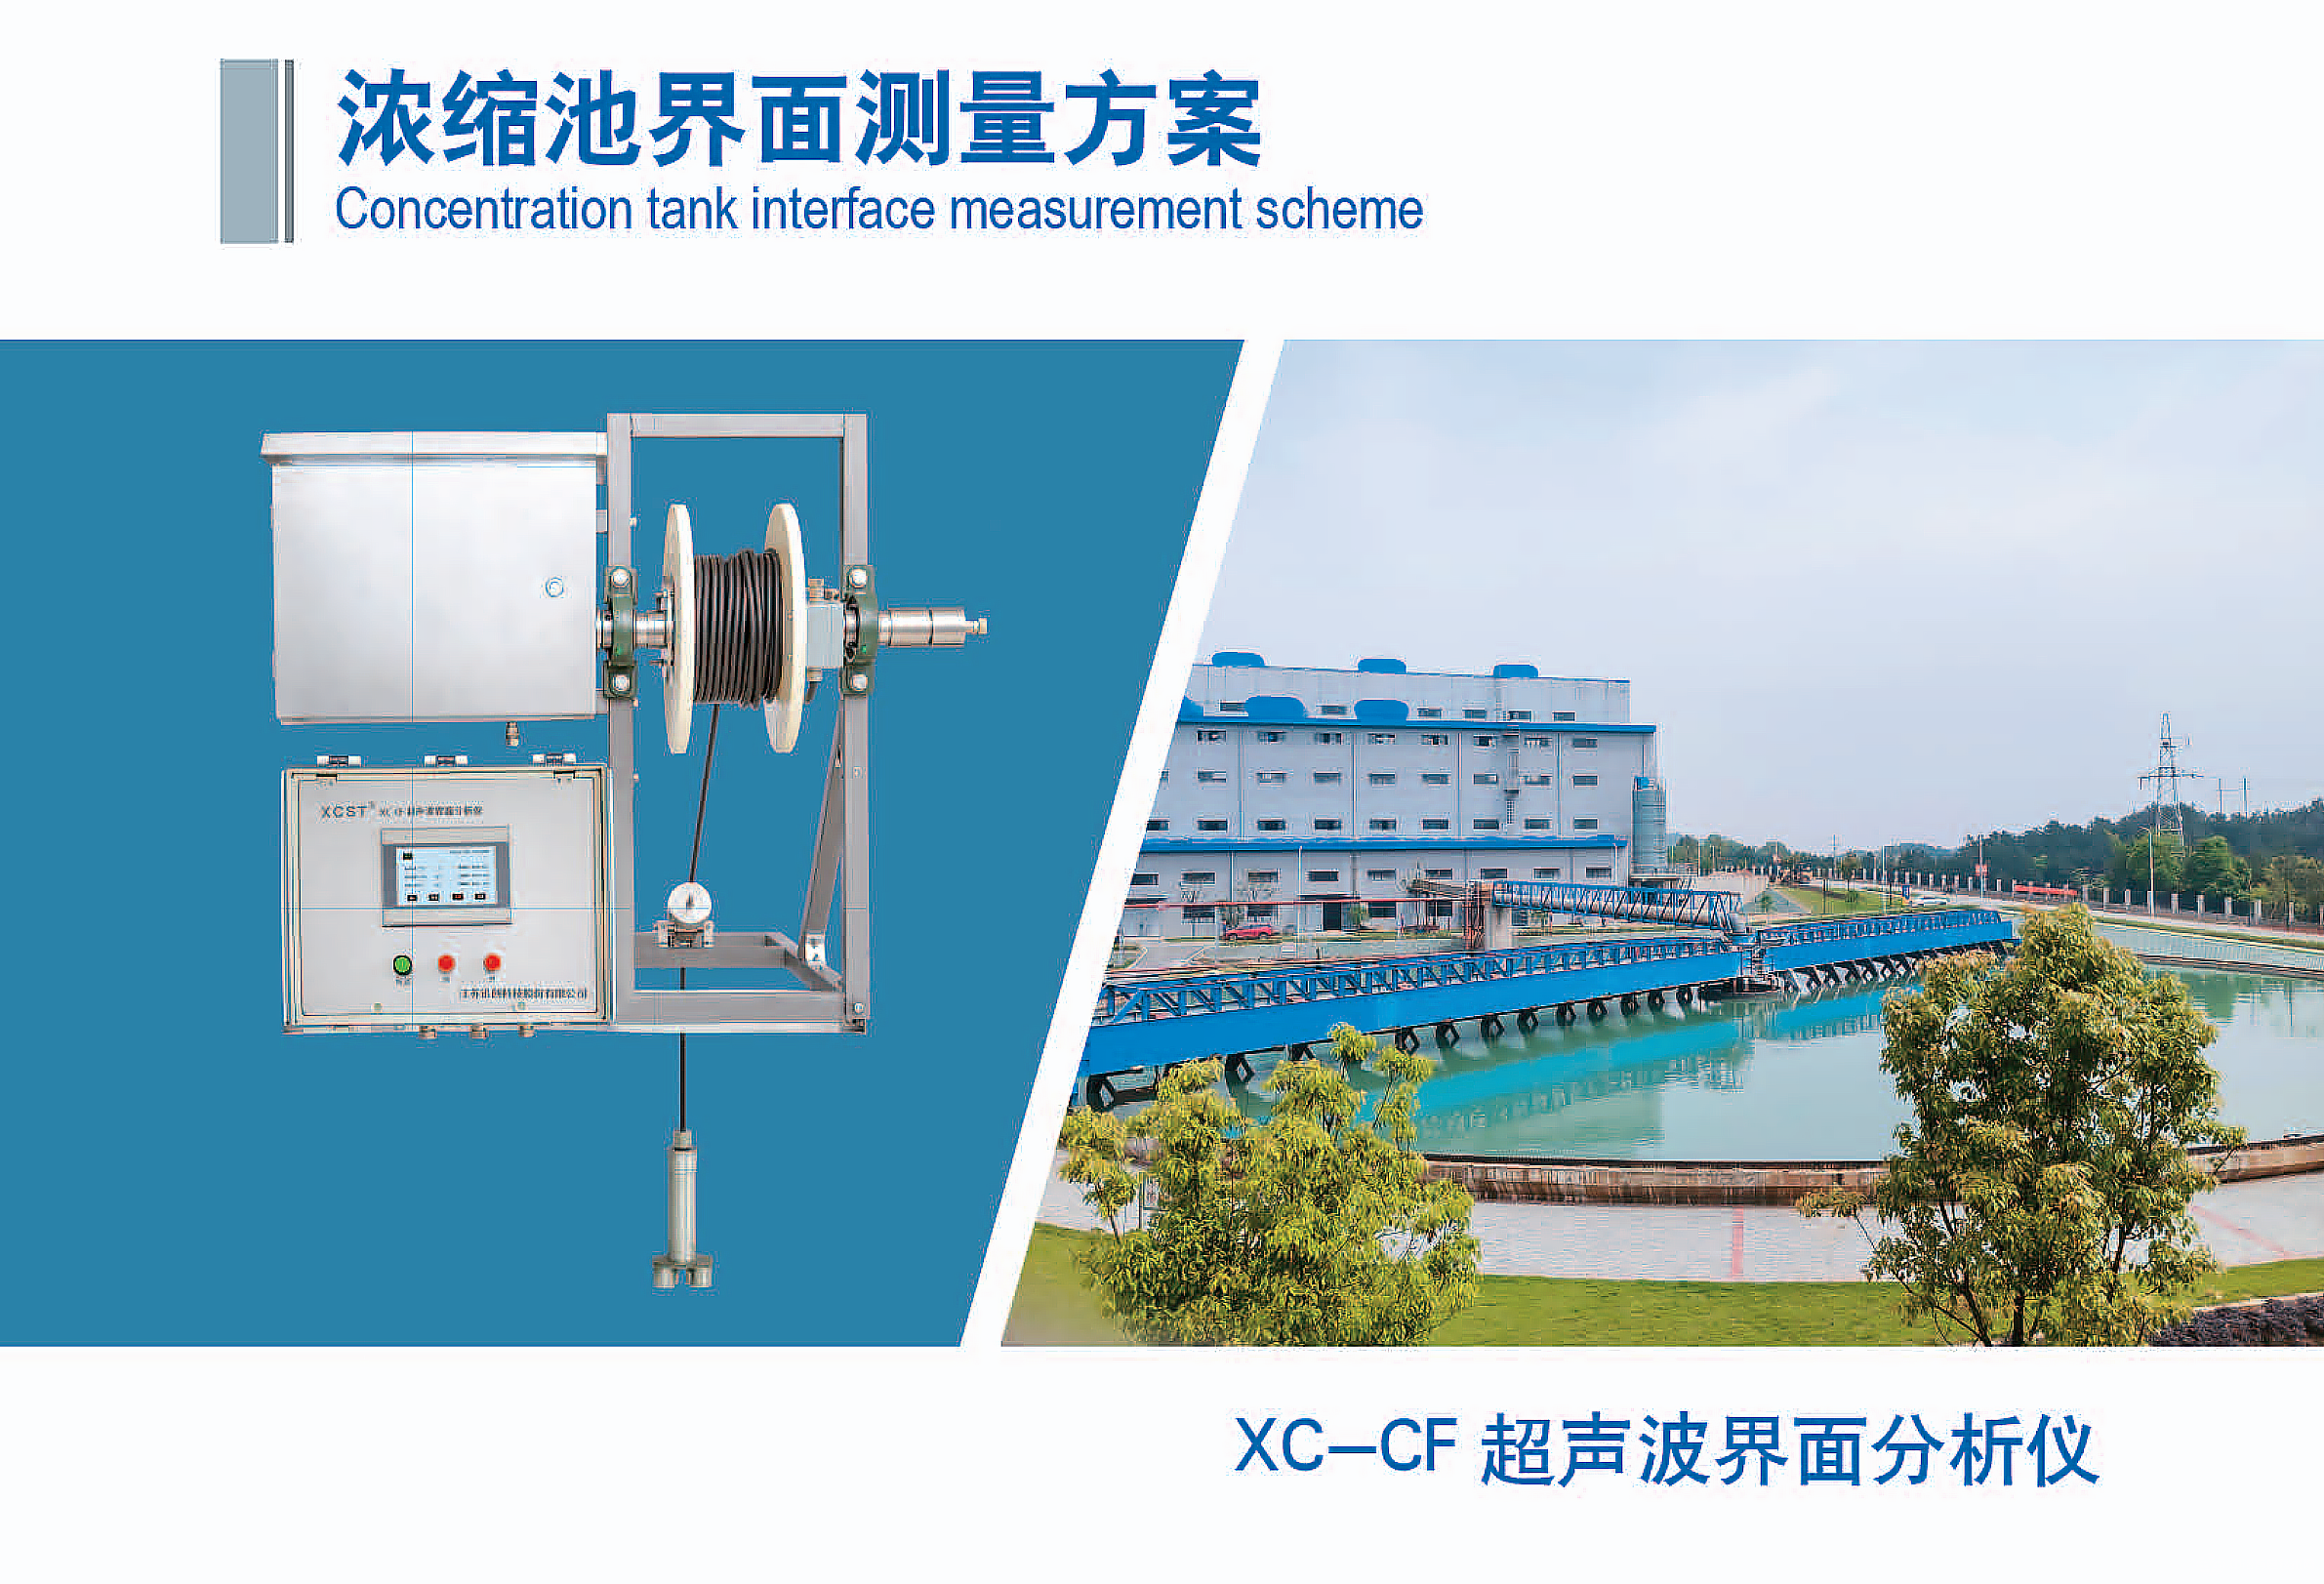 XC-CF超声波界面分析仪